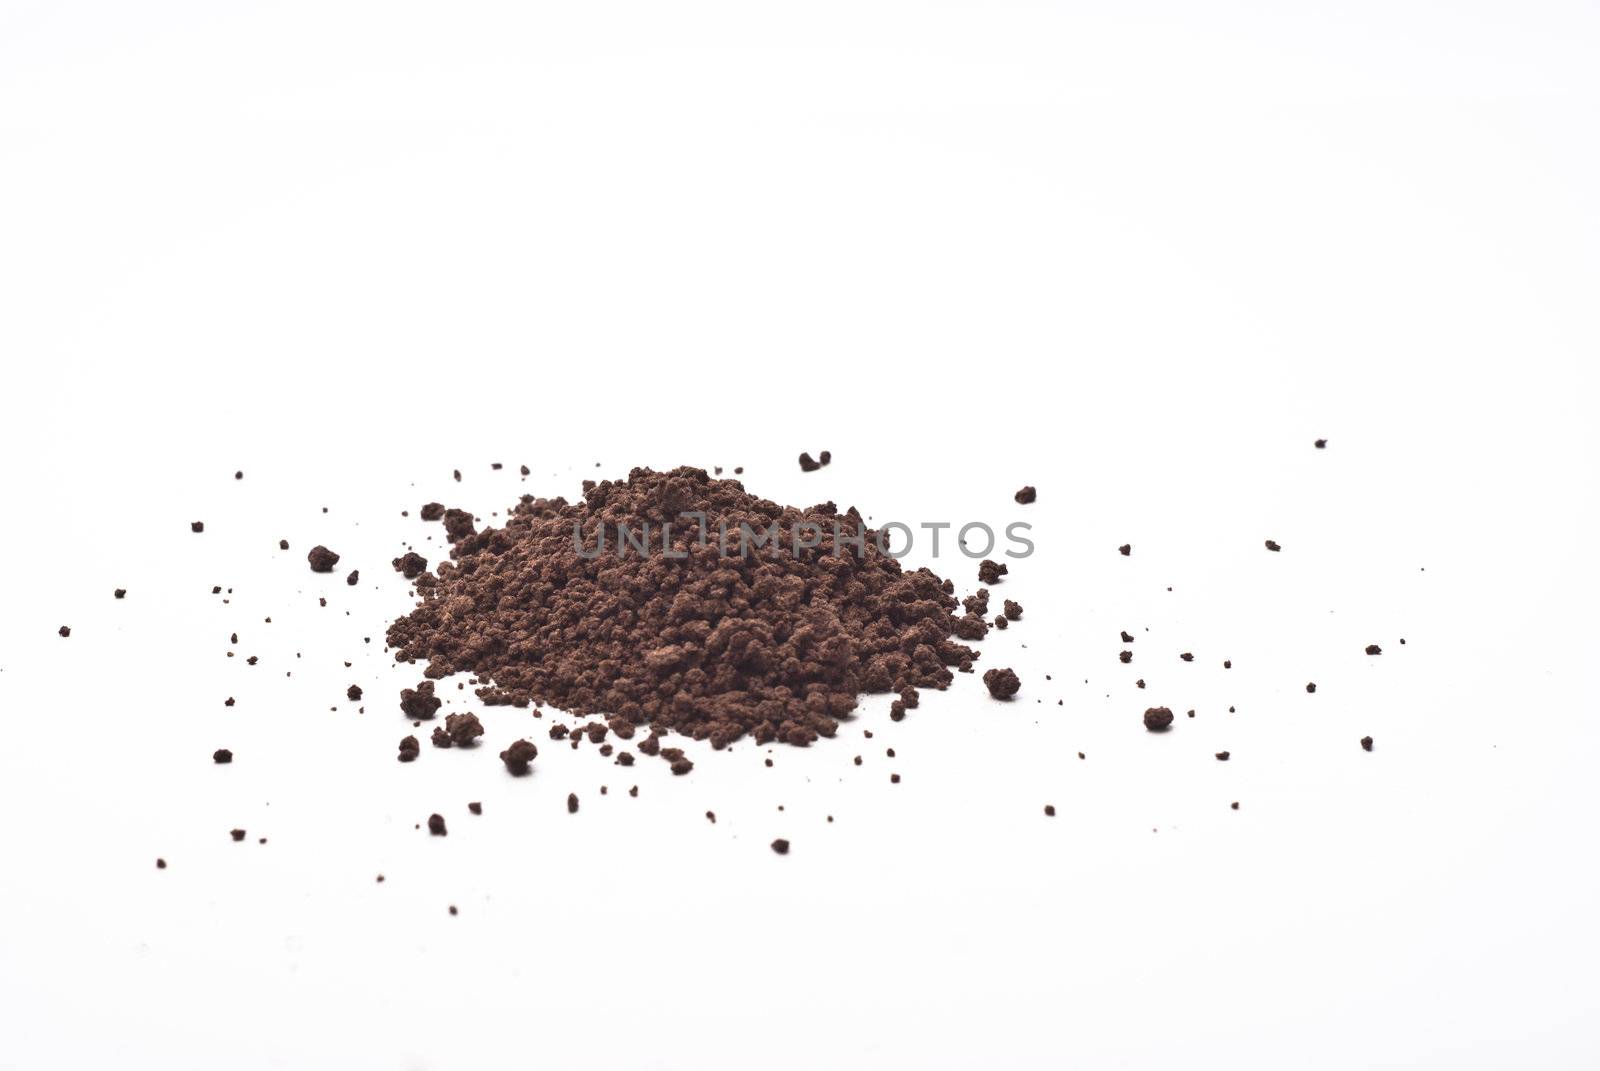 grains and cocoa powder by gandolfocannatella